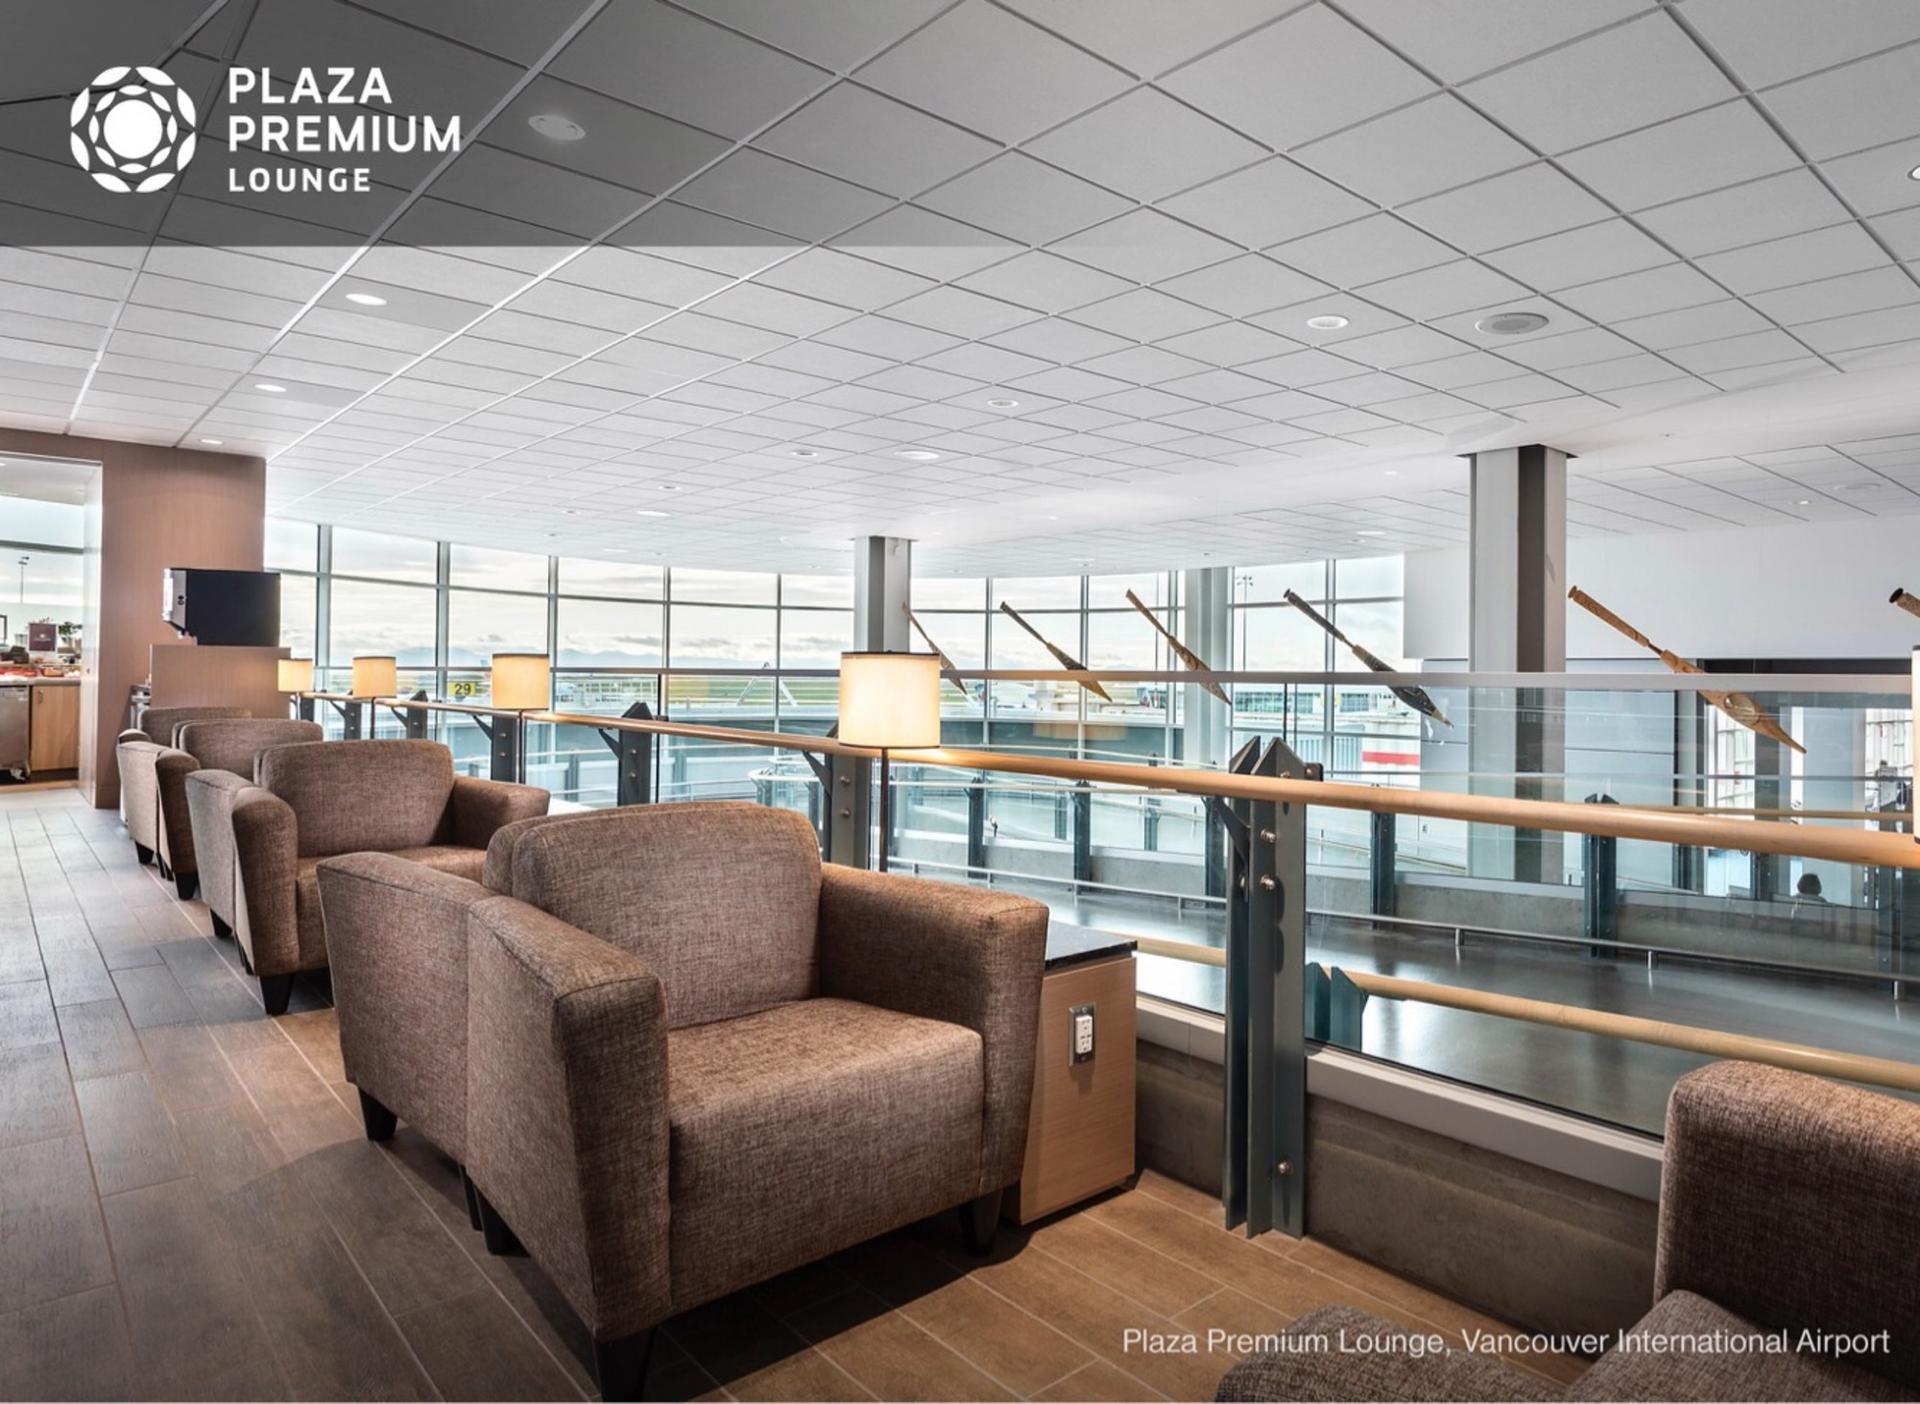 Plaza Premium Lounge (Domestic Gate C29) image 10 of 17